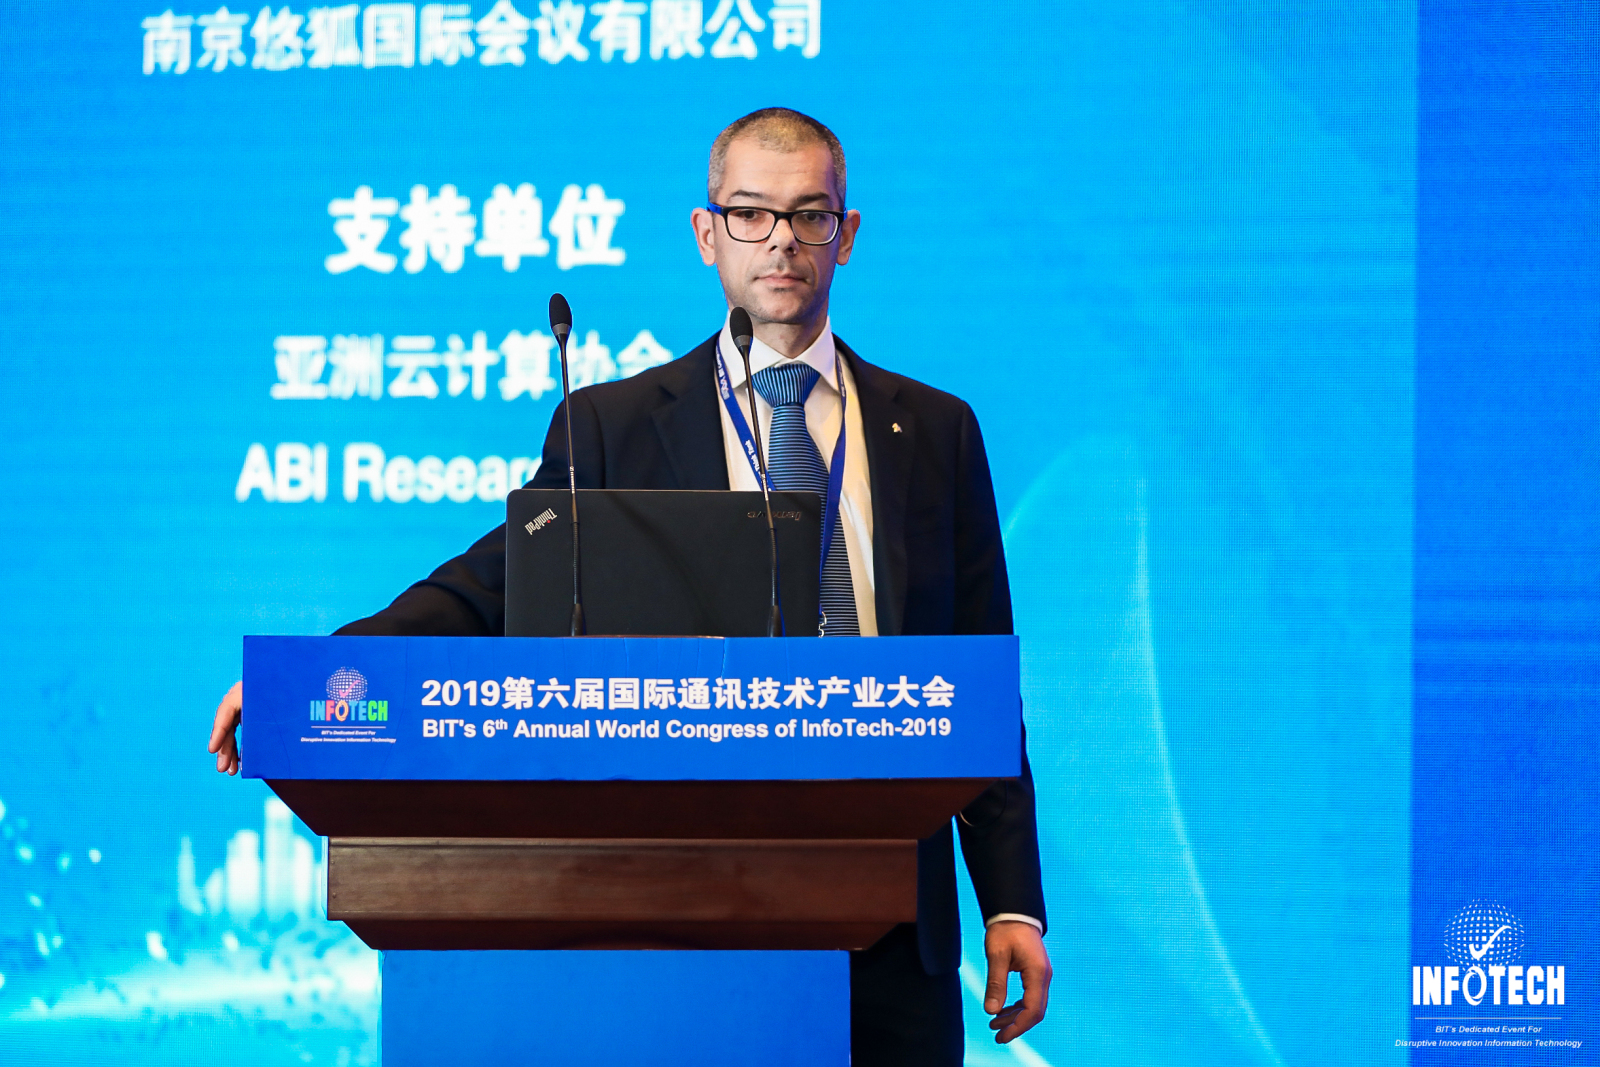 DeepCyber all’Annual World Congress di InfoTech in Cina: Cybersecurity IoT e Automotive come priorità